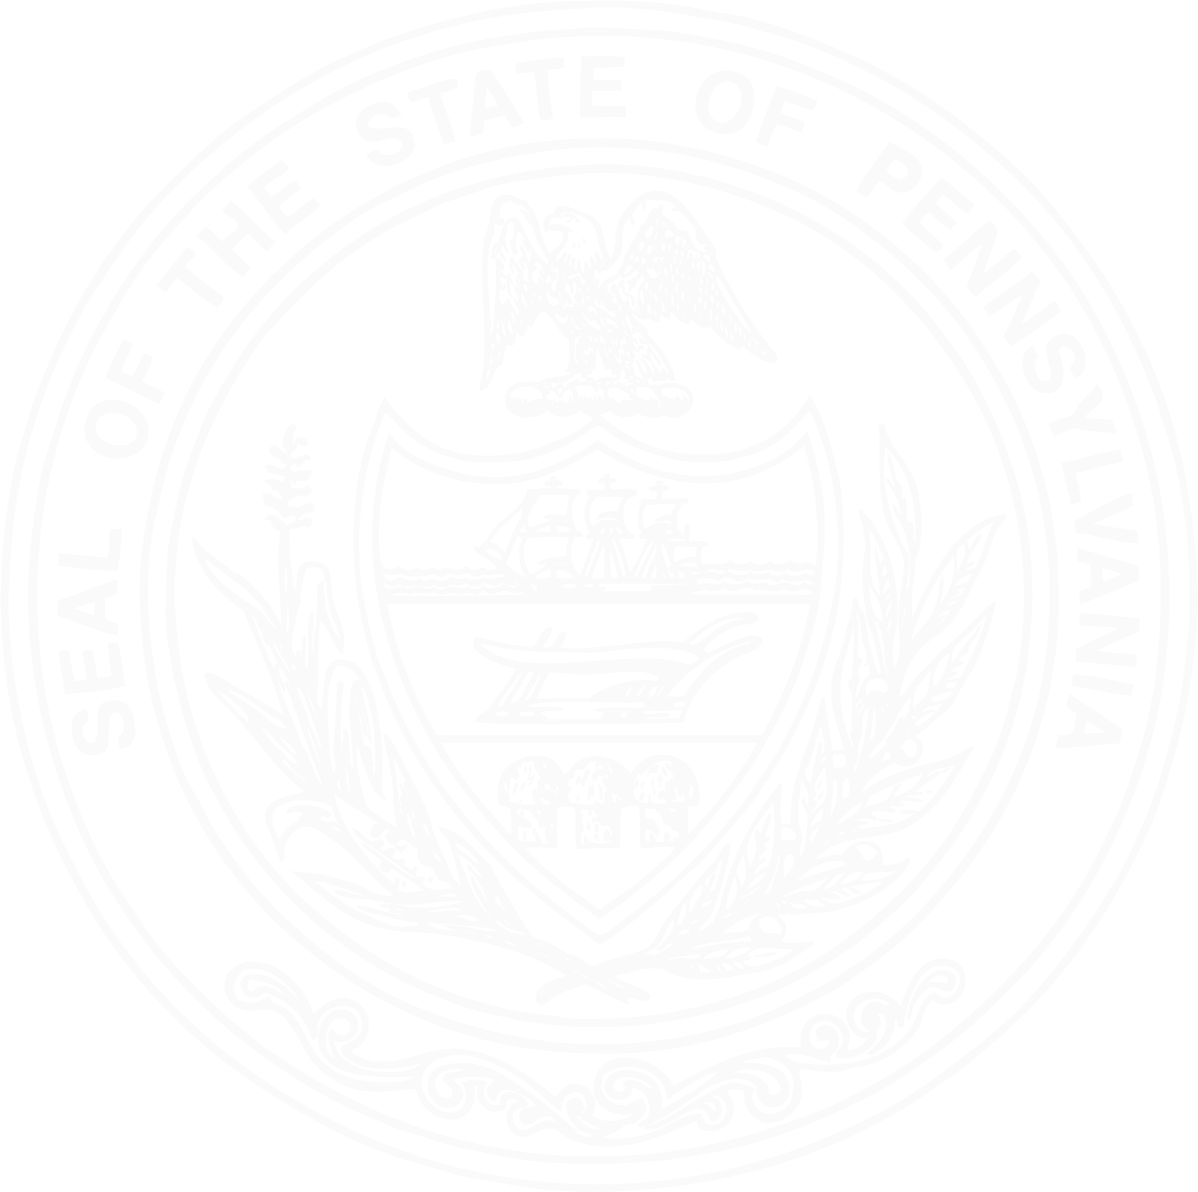 Governor's Logotype